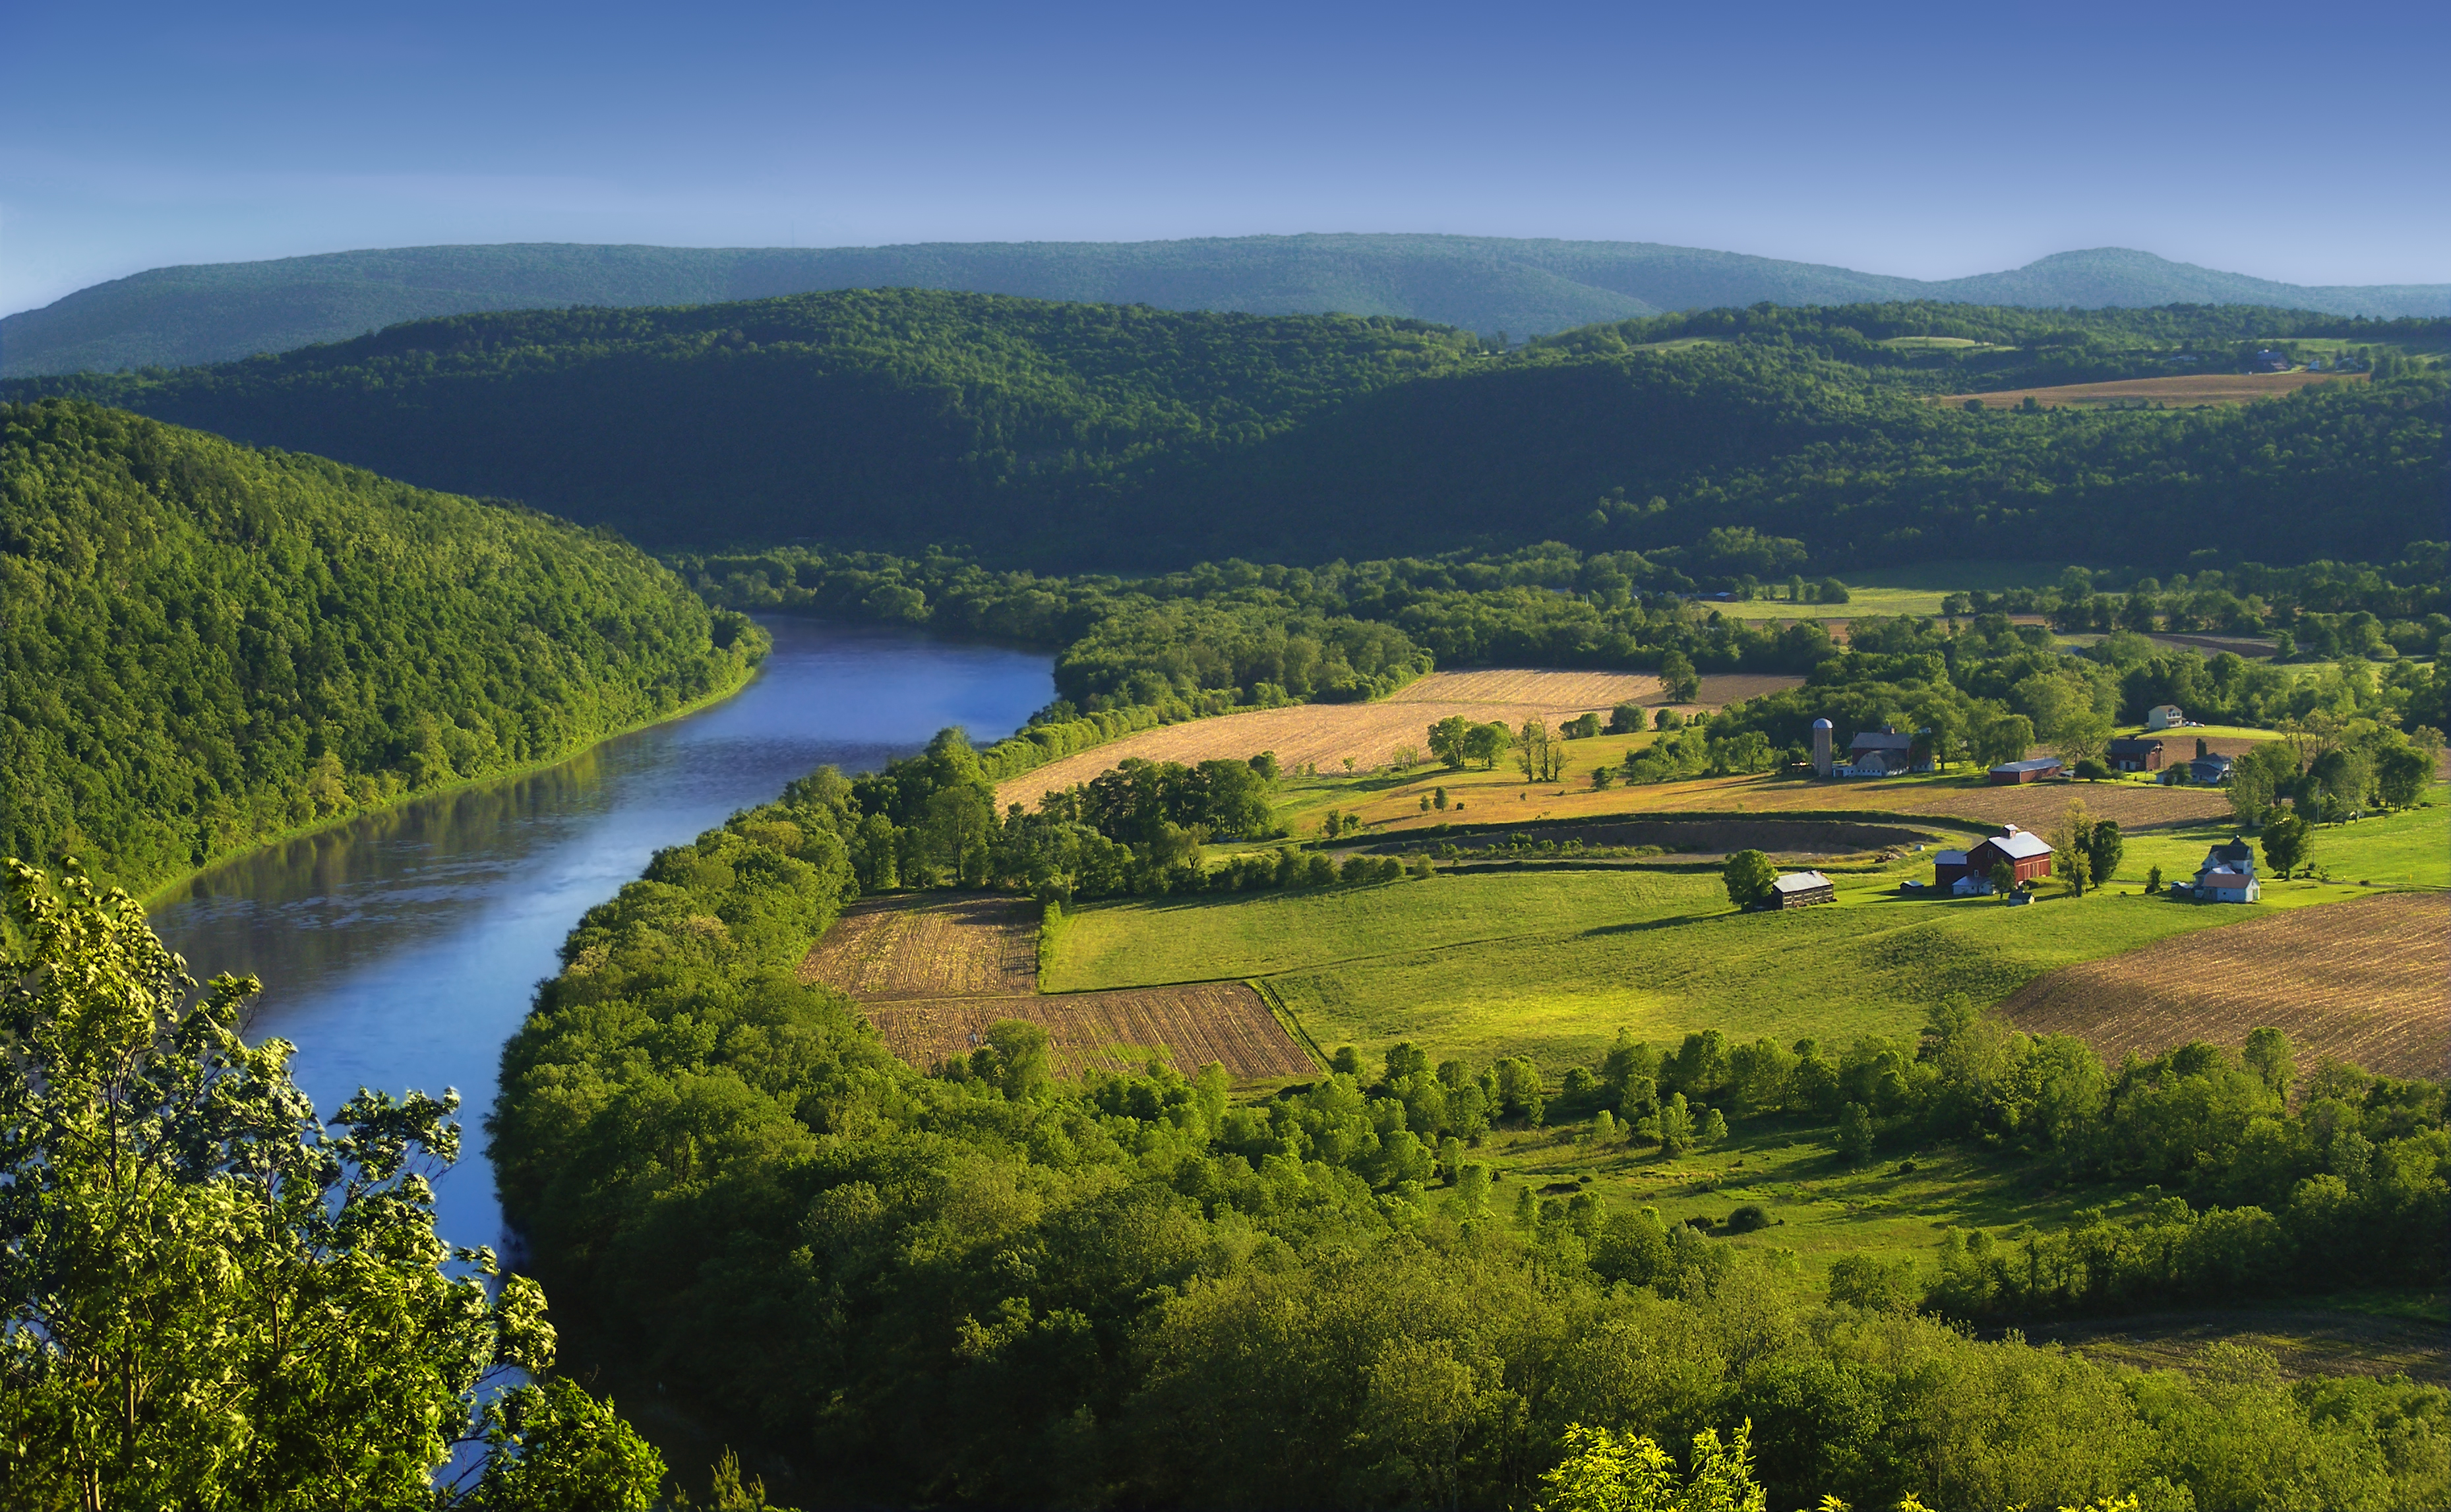 The Susquehanna River running through Bradford County, Pennsylvania